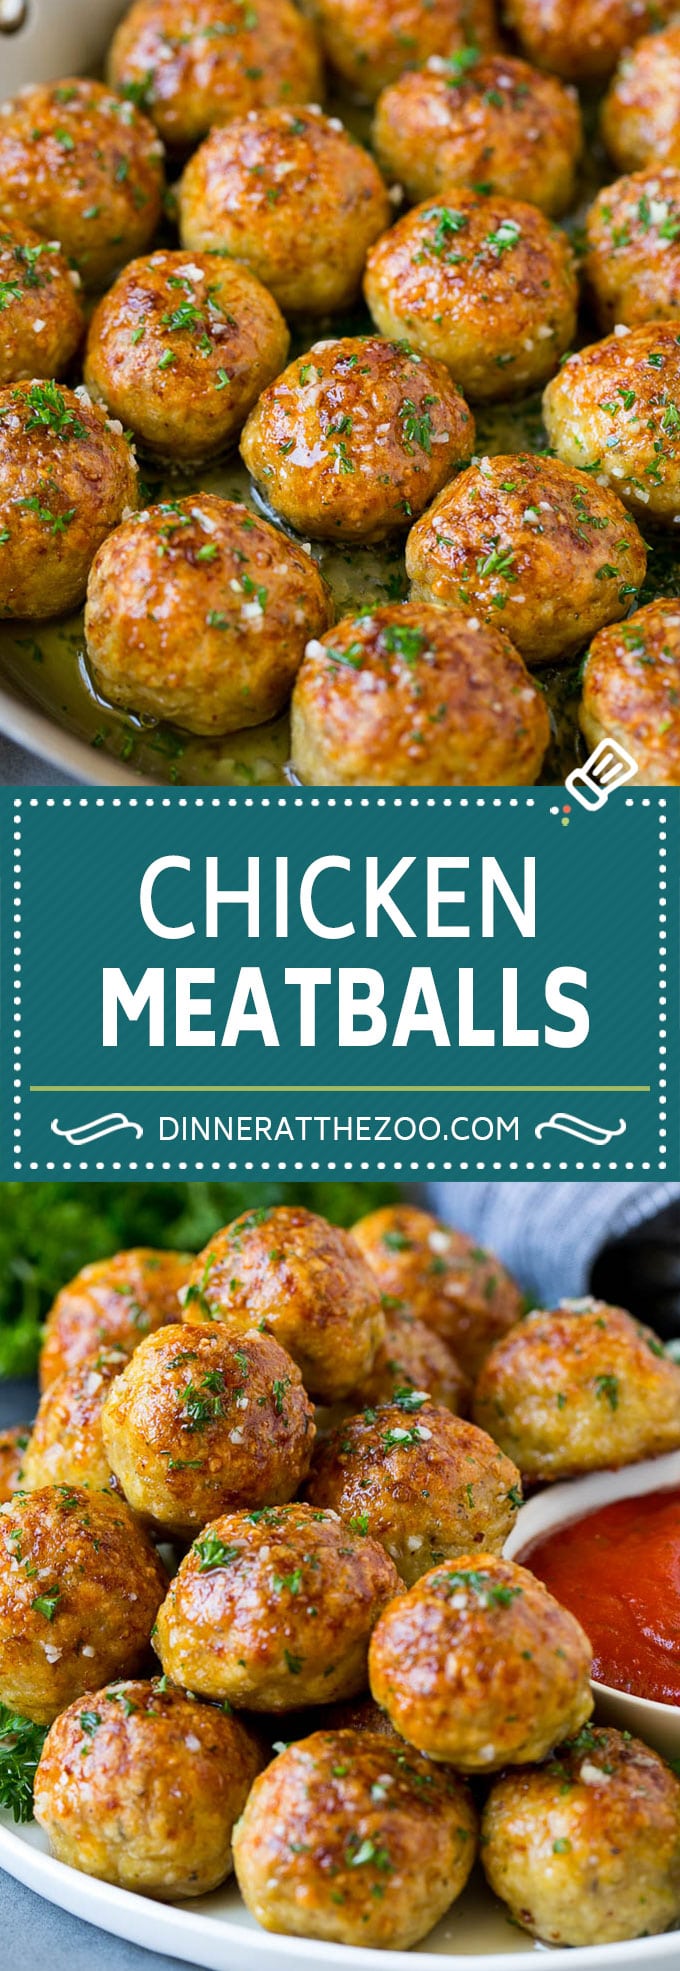 Chicken Meatballs Recipe | Baked Meatballs #chicken #meatballs #dinner #dinneratthezoo #comfortfood